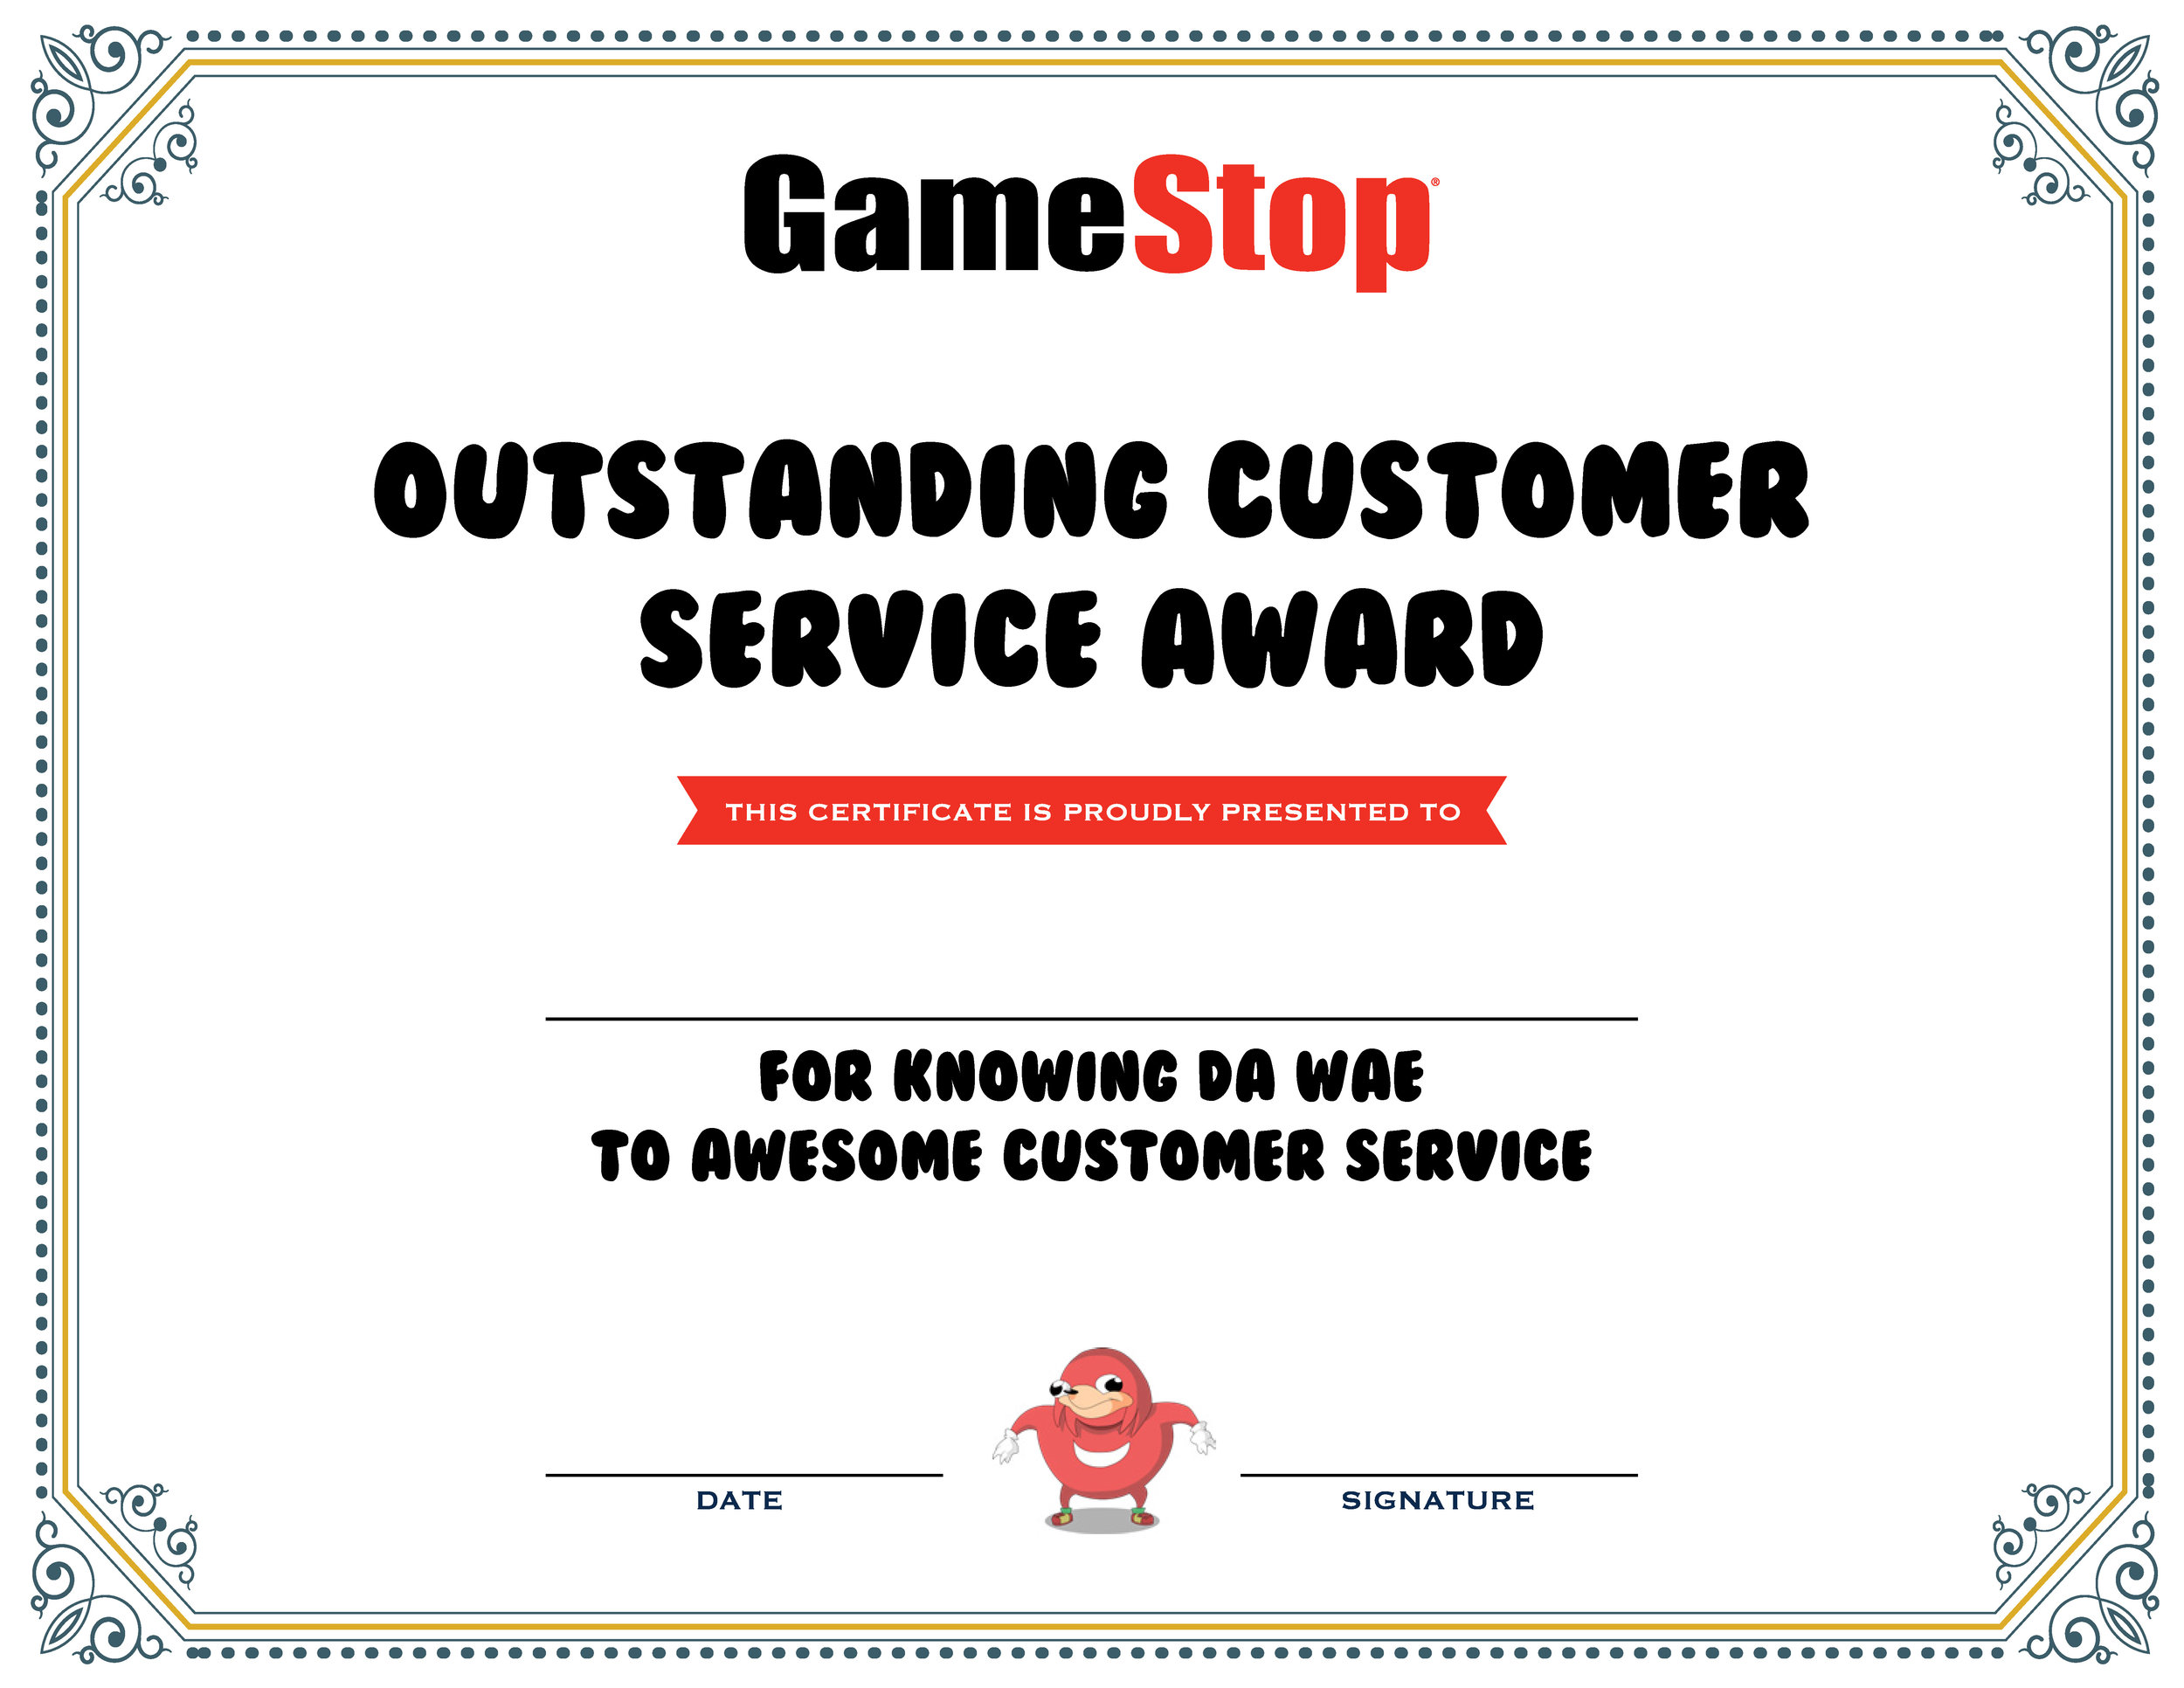 Gamestop_Awards_2019_Page_1.jpg